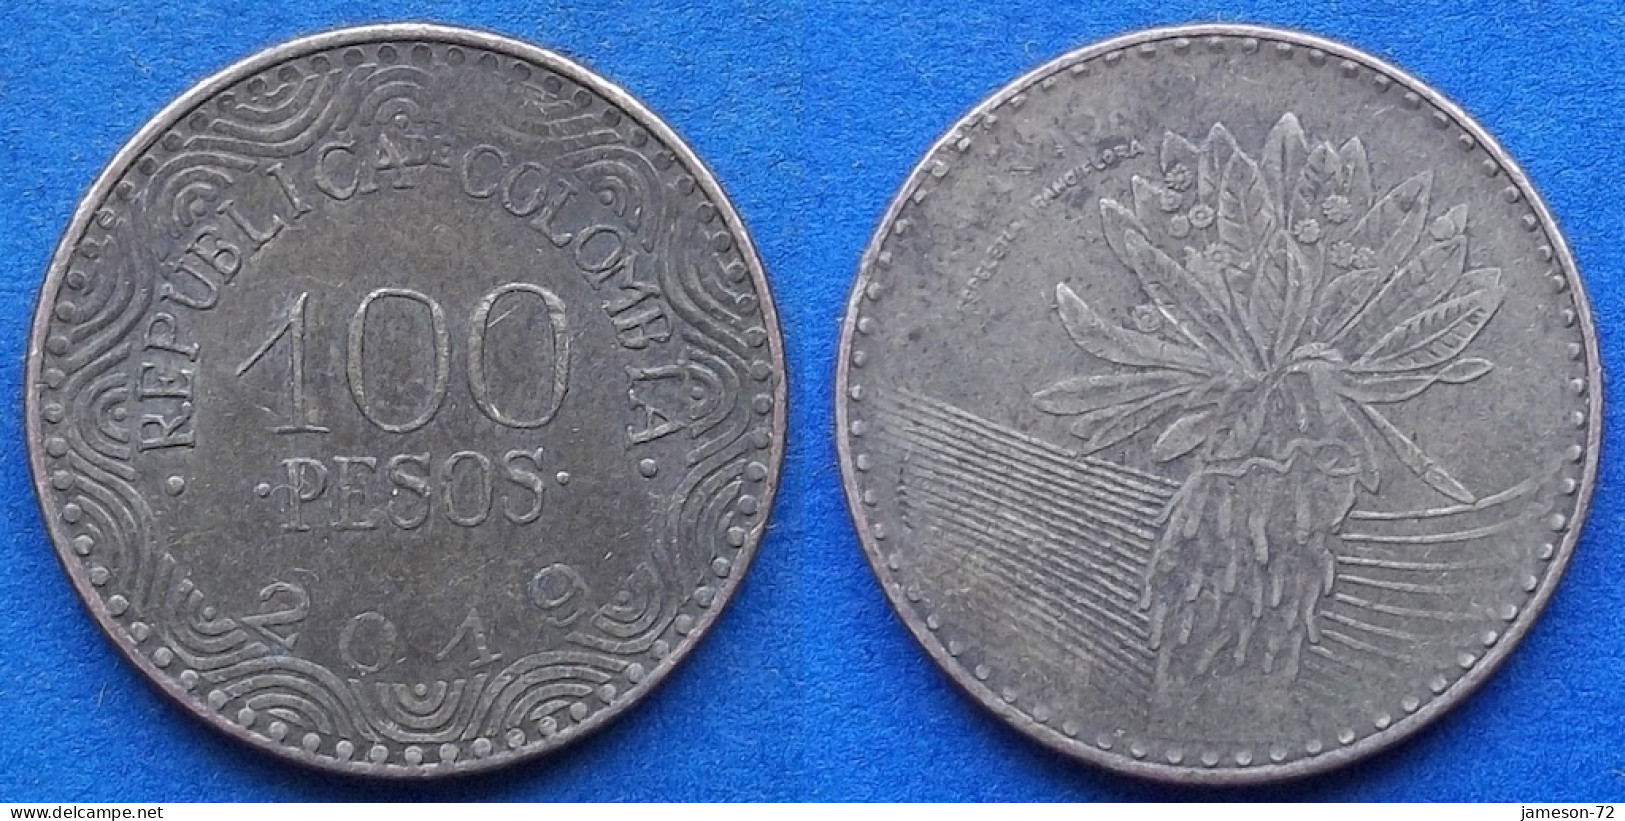 COLOMBIA - 100 Pesos 2019 "Frailejon" KM# 296 Republic - Edelweiss Coins - Colombia